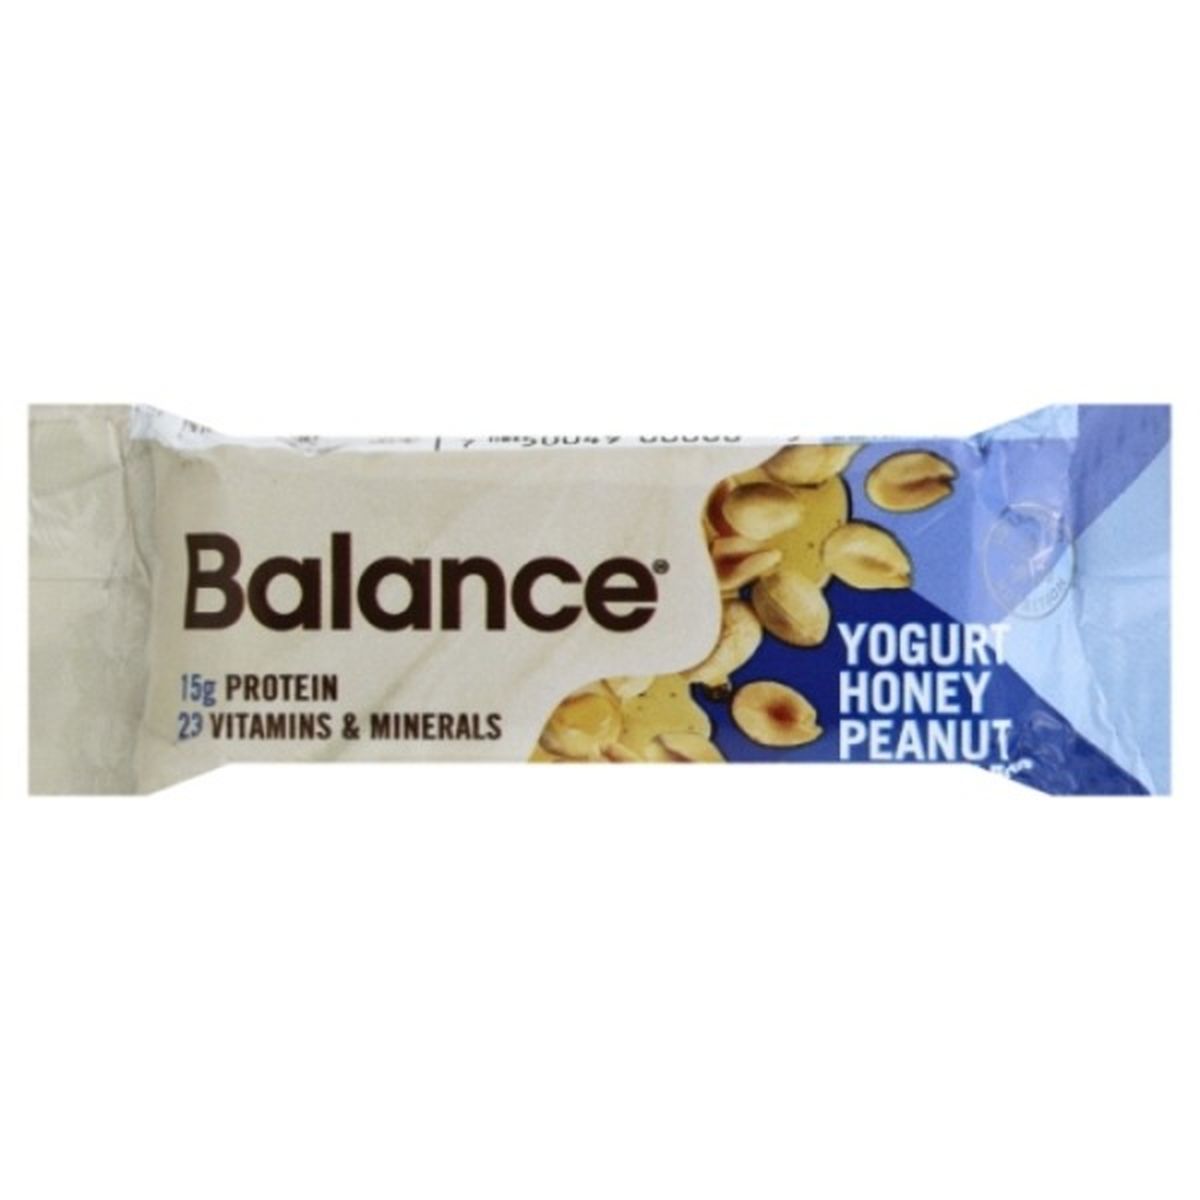 Calories in Balance Bar Nutrition Bar, Yogurt Honey Peanut